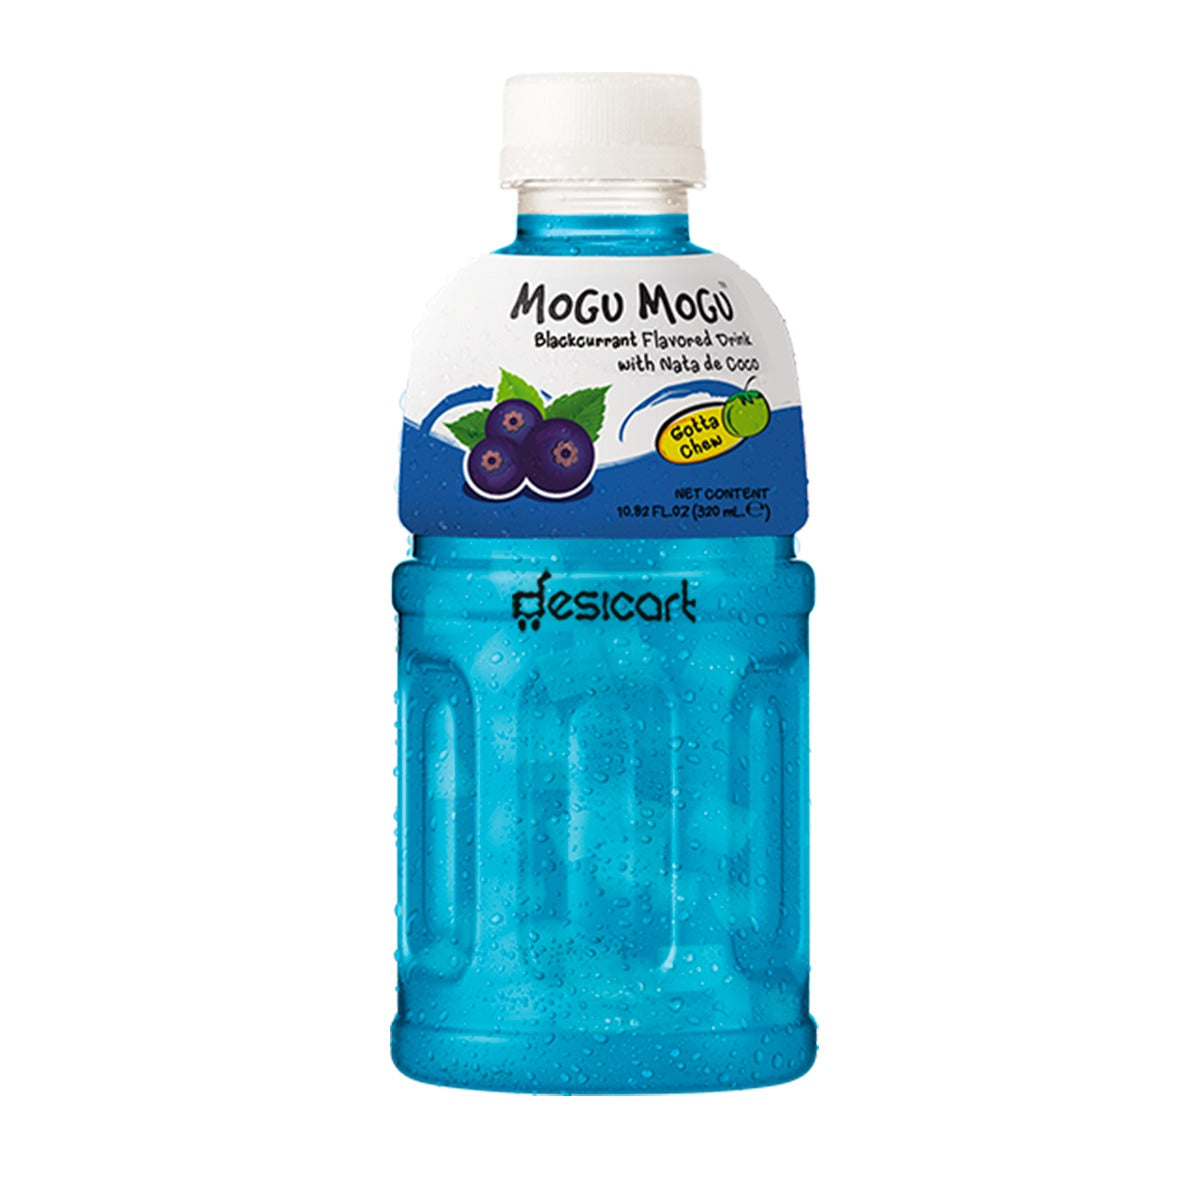 MOGU MOGU BLACKCURRANT FLAVOURED DRINK 320ML